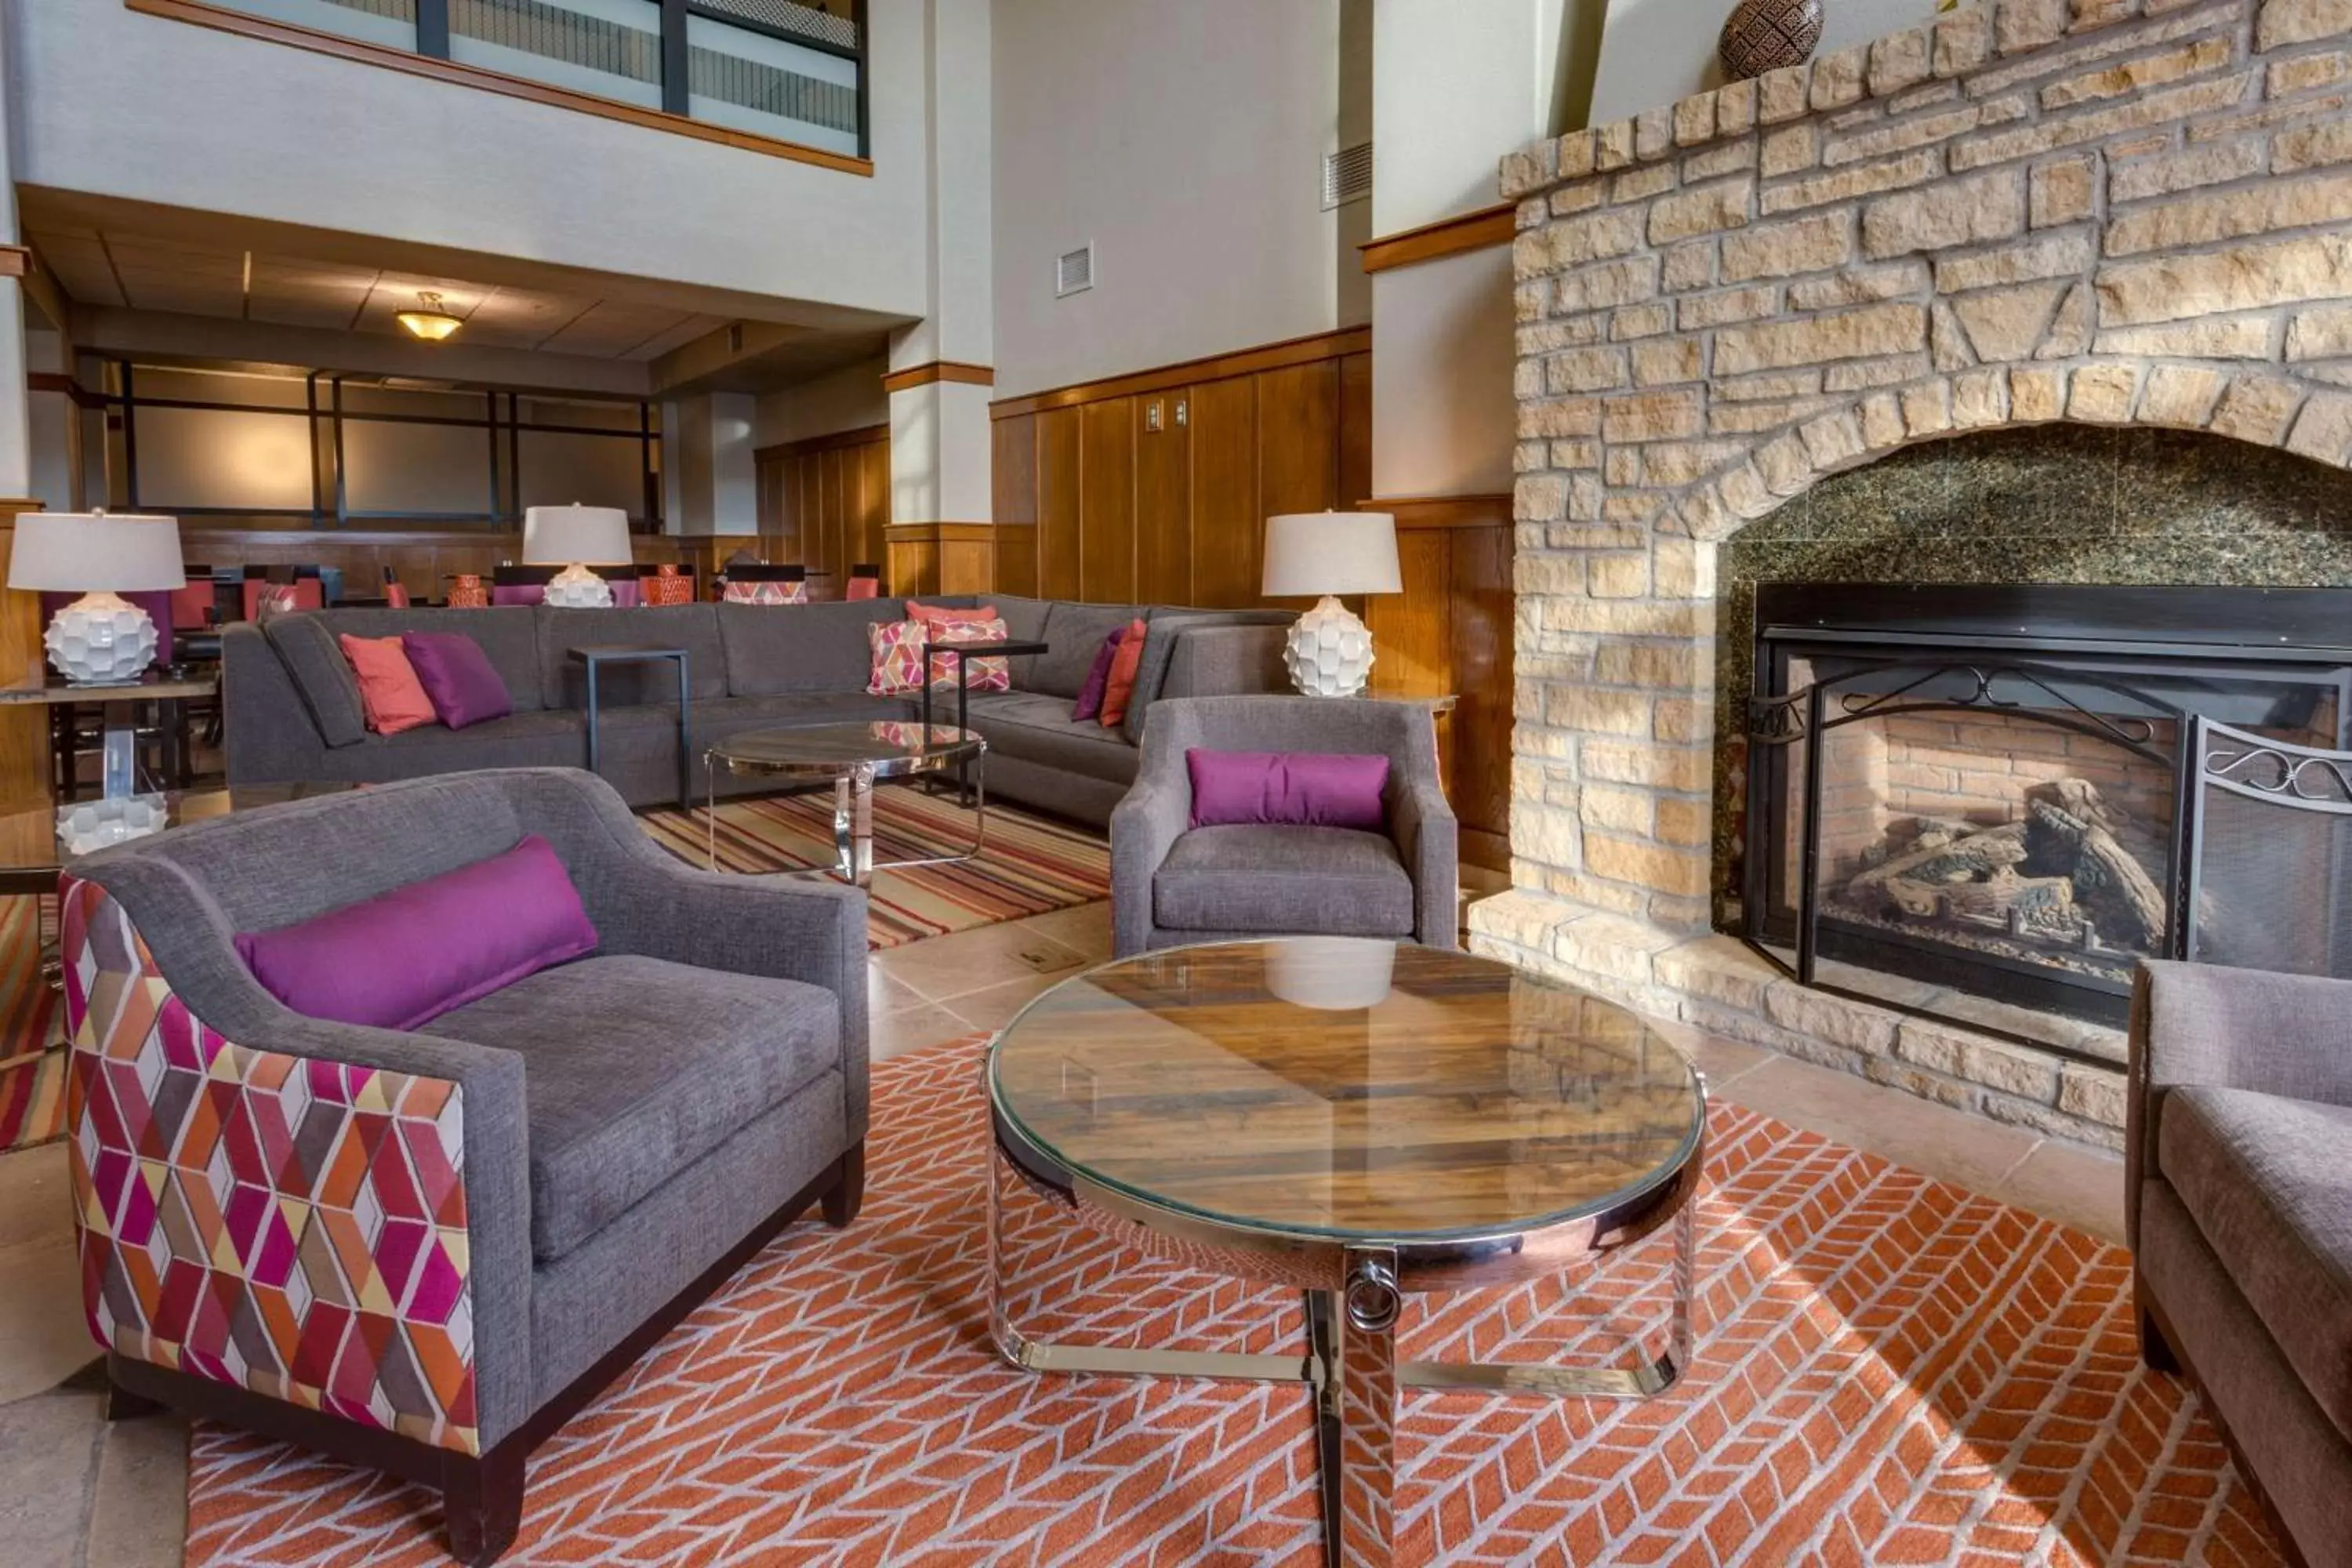 Lobby or reception in Drury Inn & Suites Las Cruces